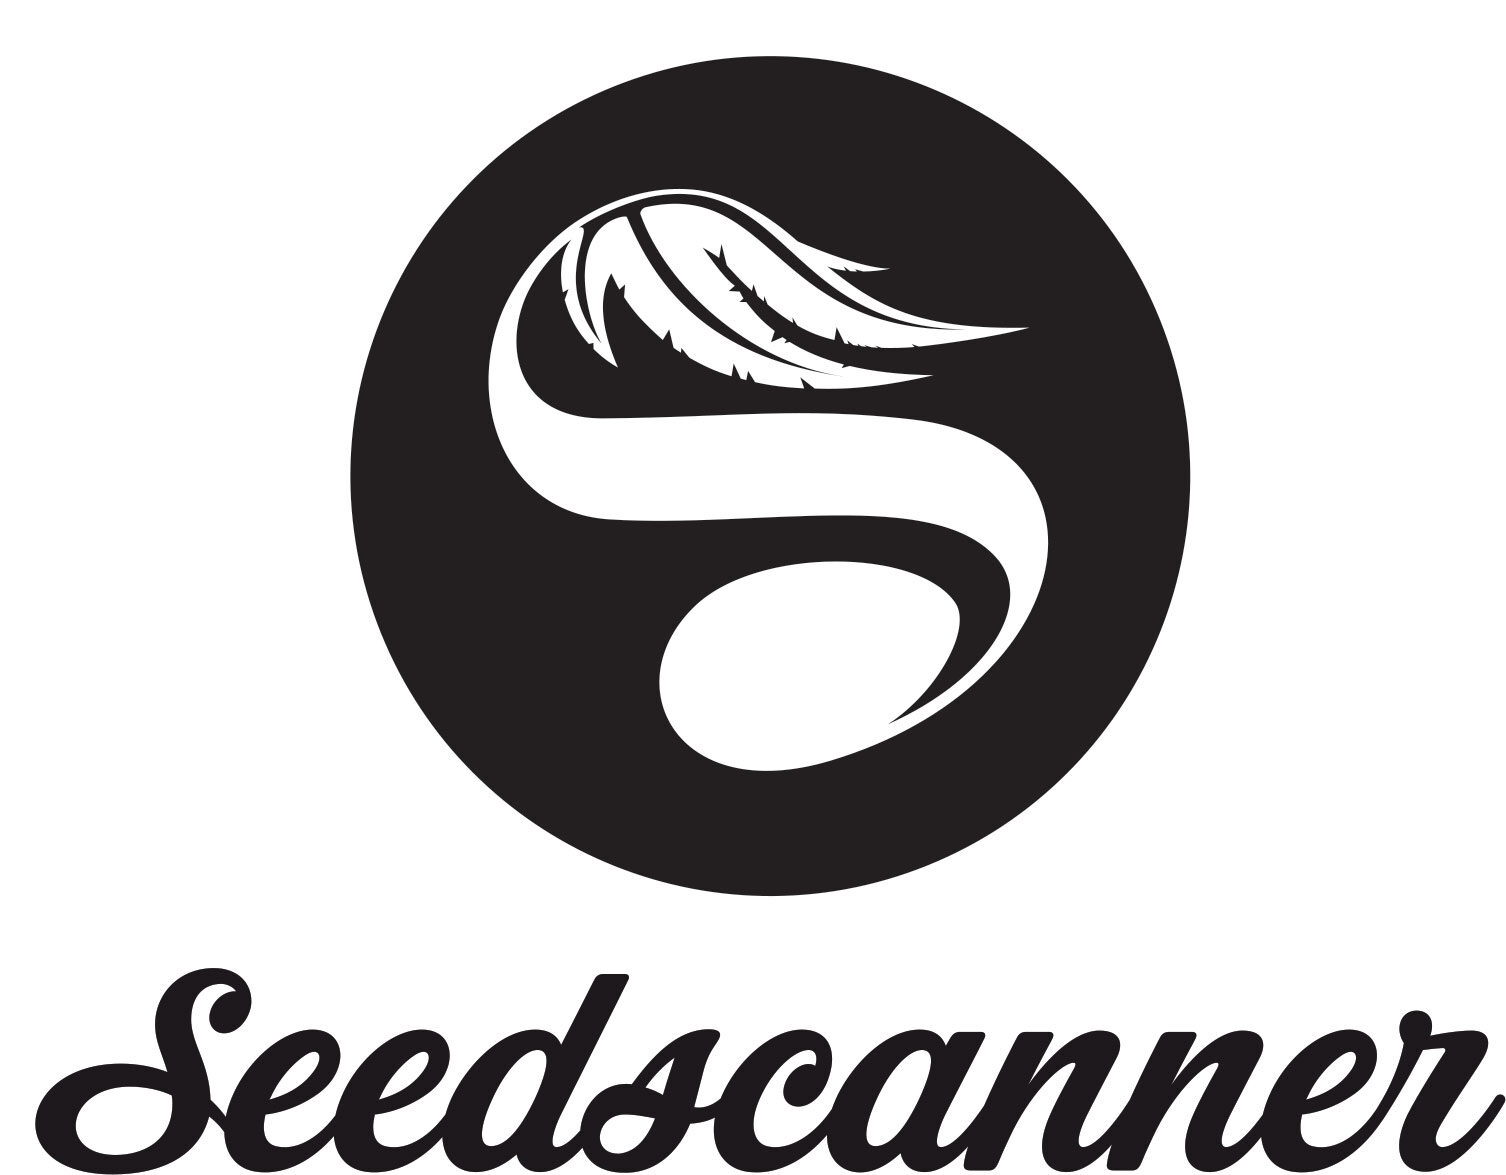 Seedscanner